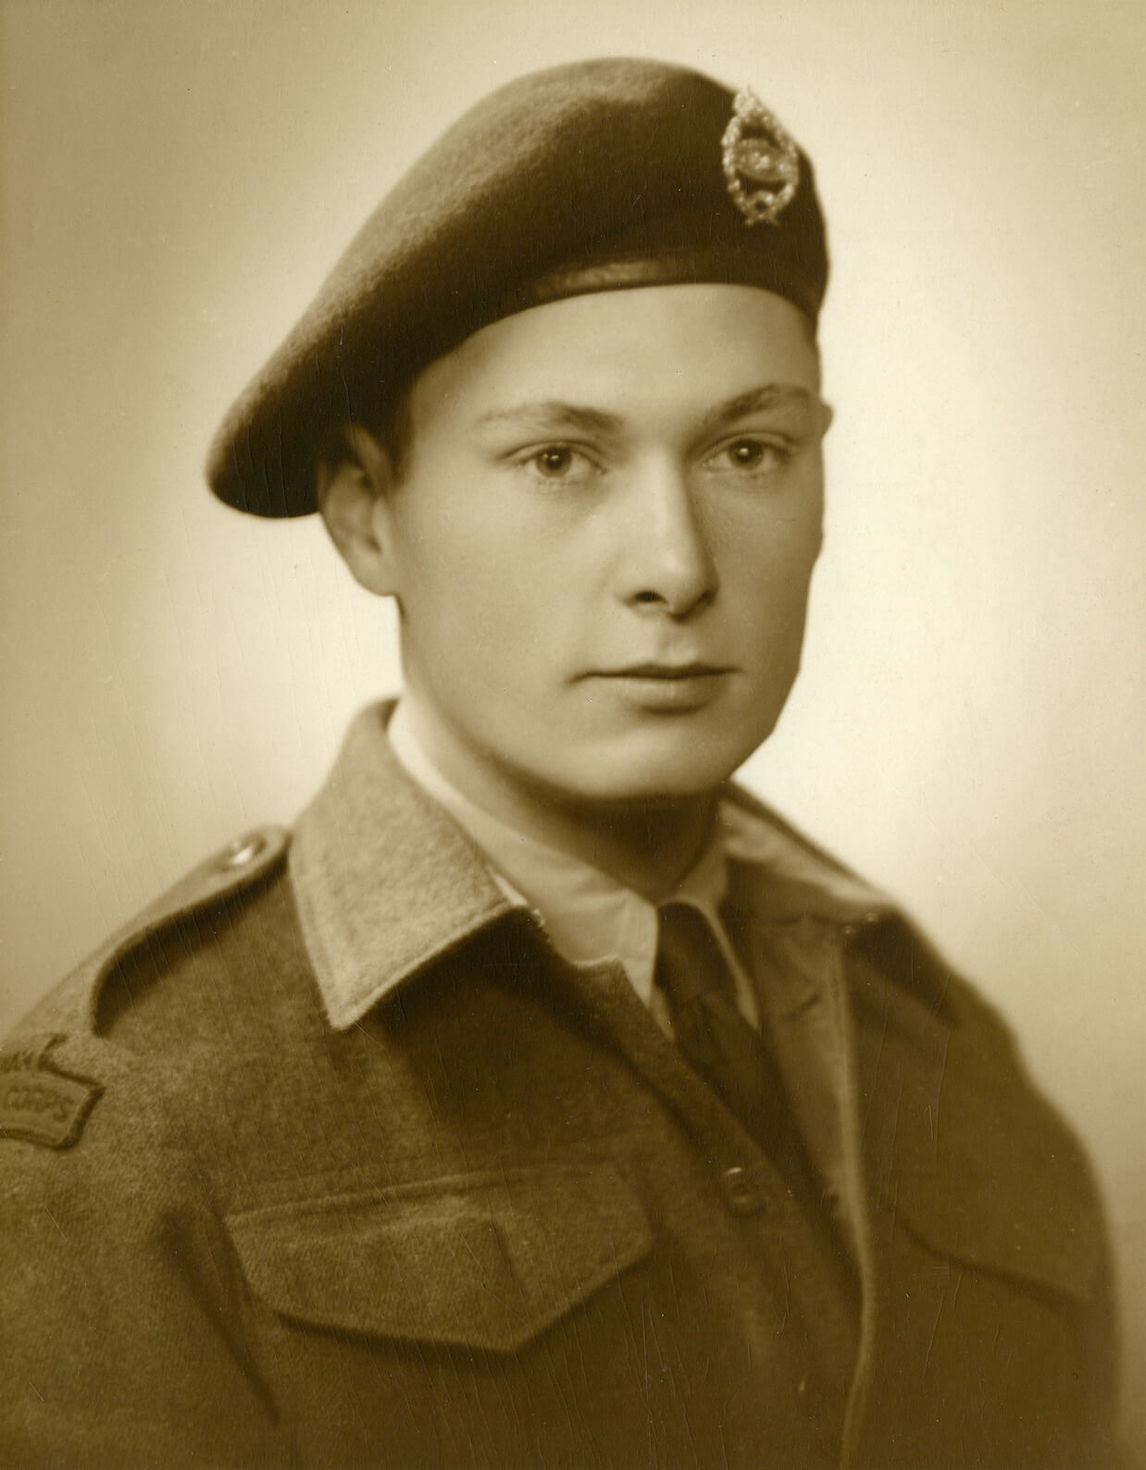 Paterson Ewen in his army uniform, c. 1944